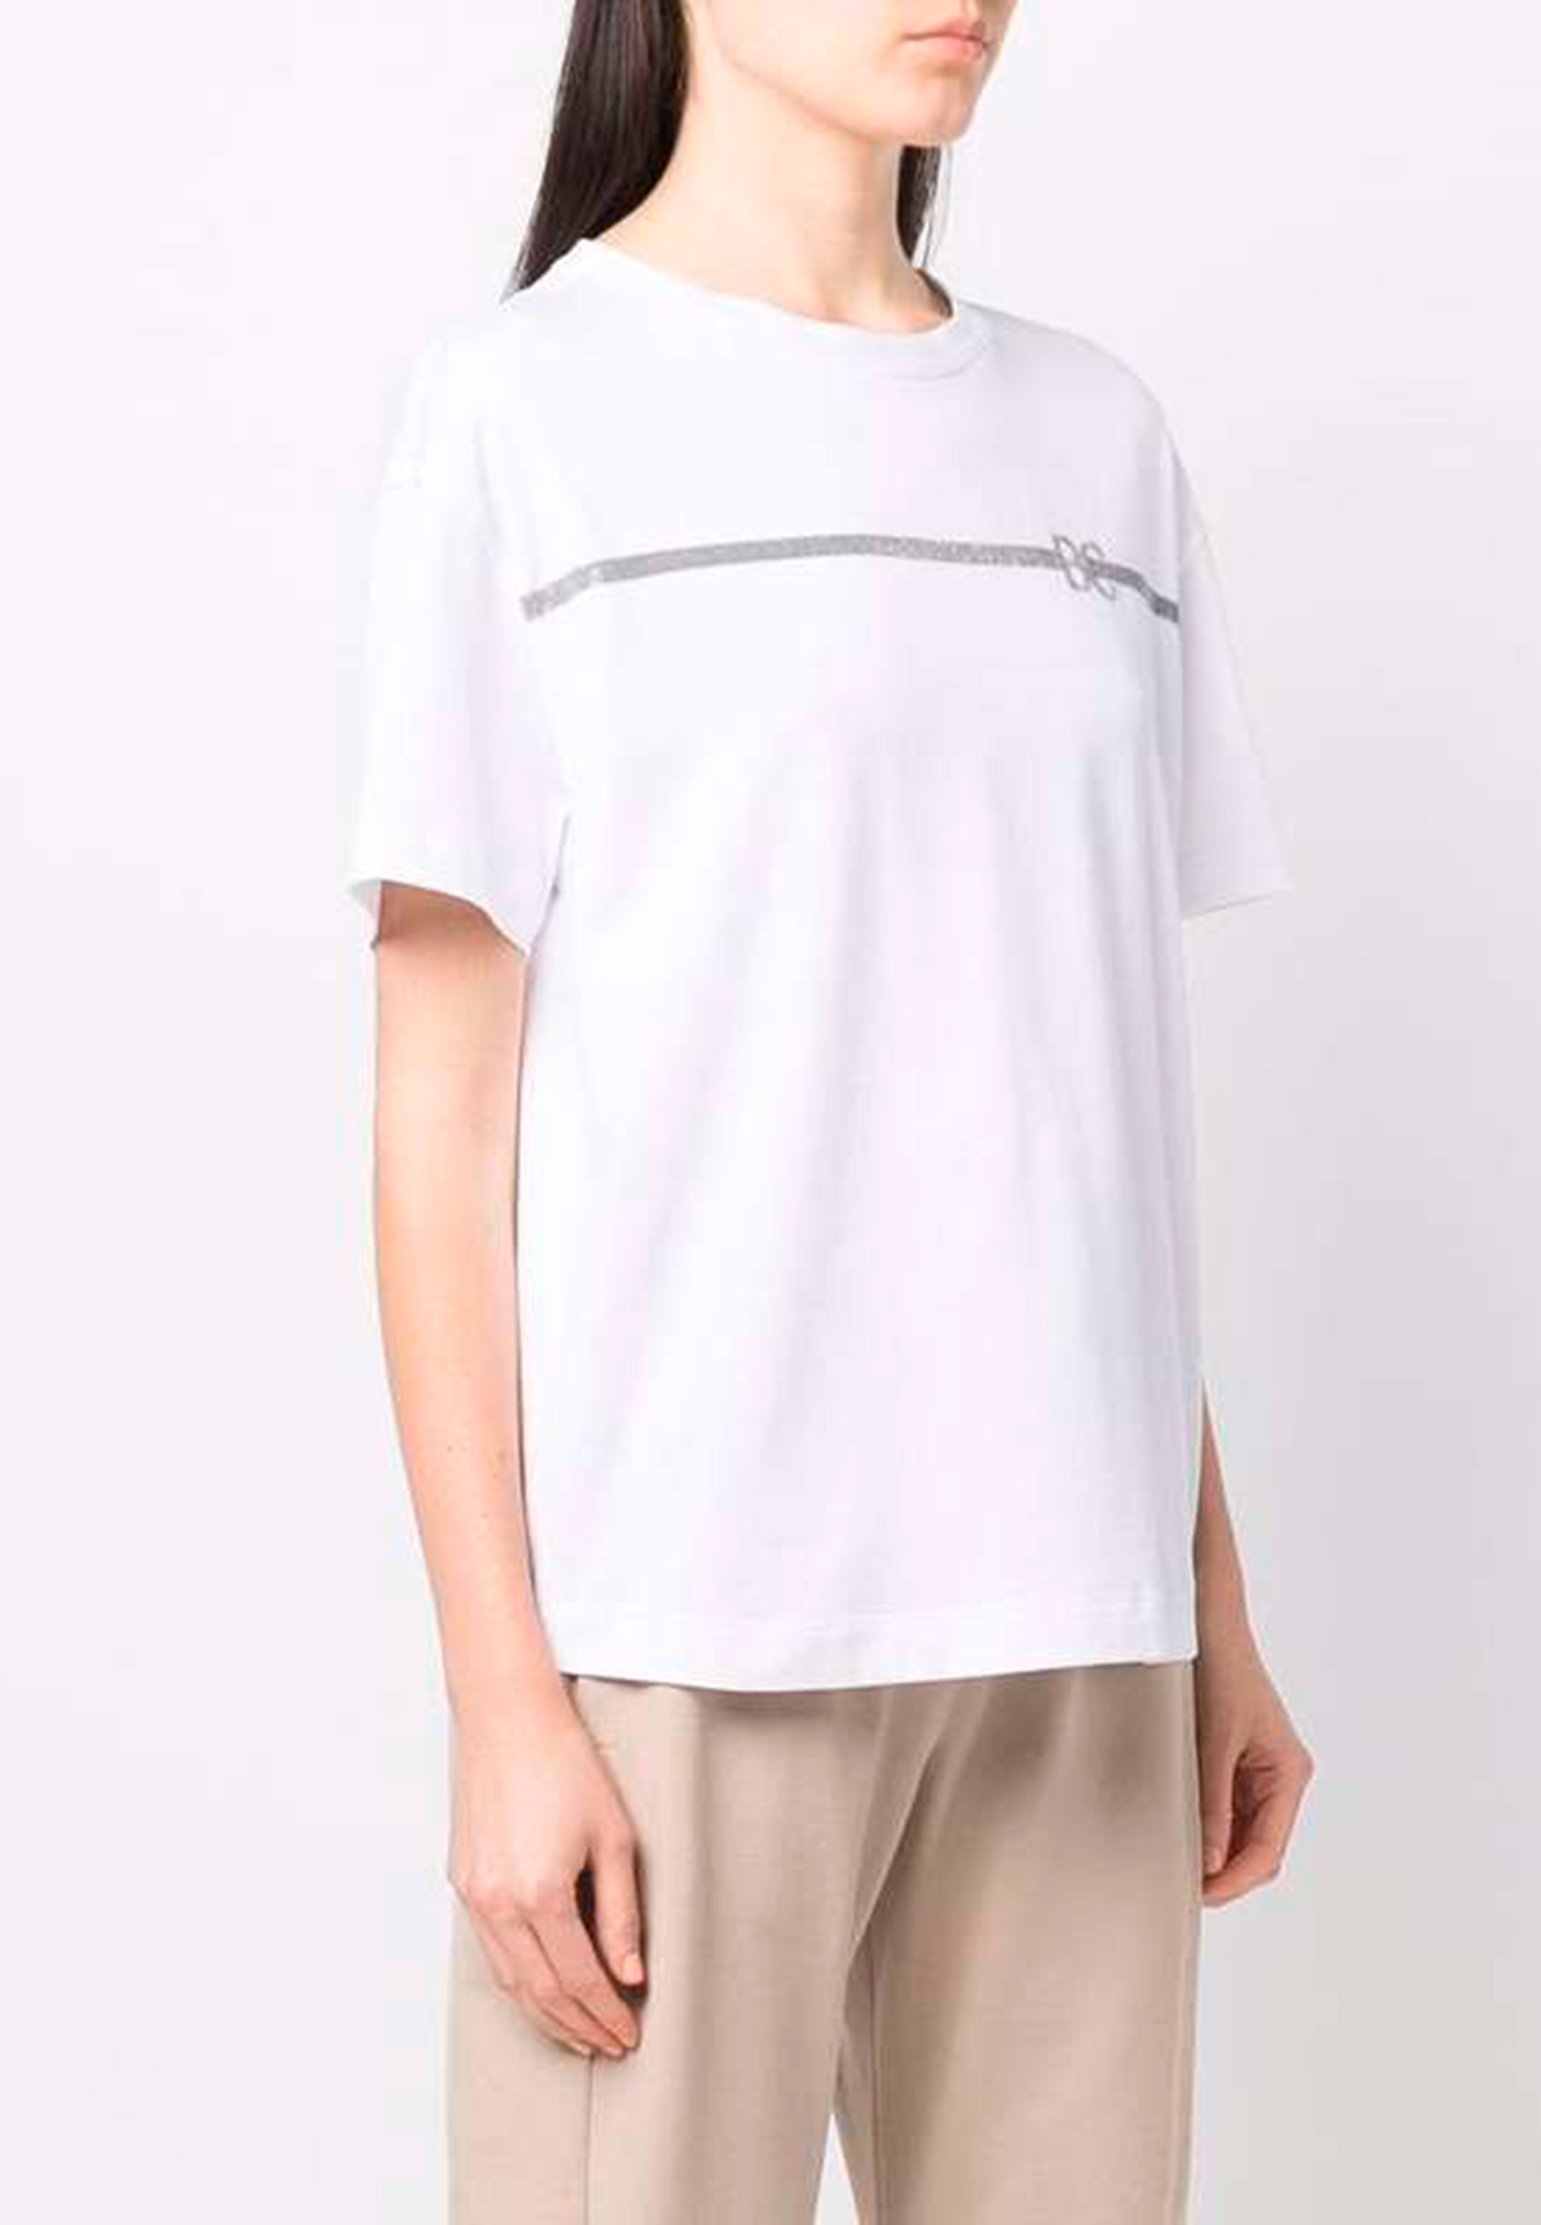 T-Shirt BRUNELLO CUCINELLI Color: white (Code: 264) in online store Allure